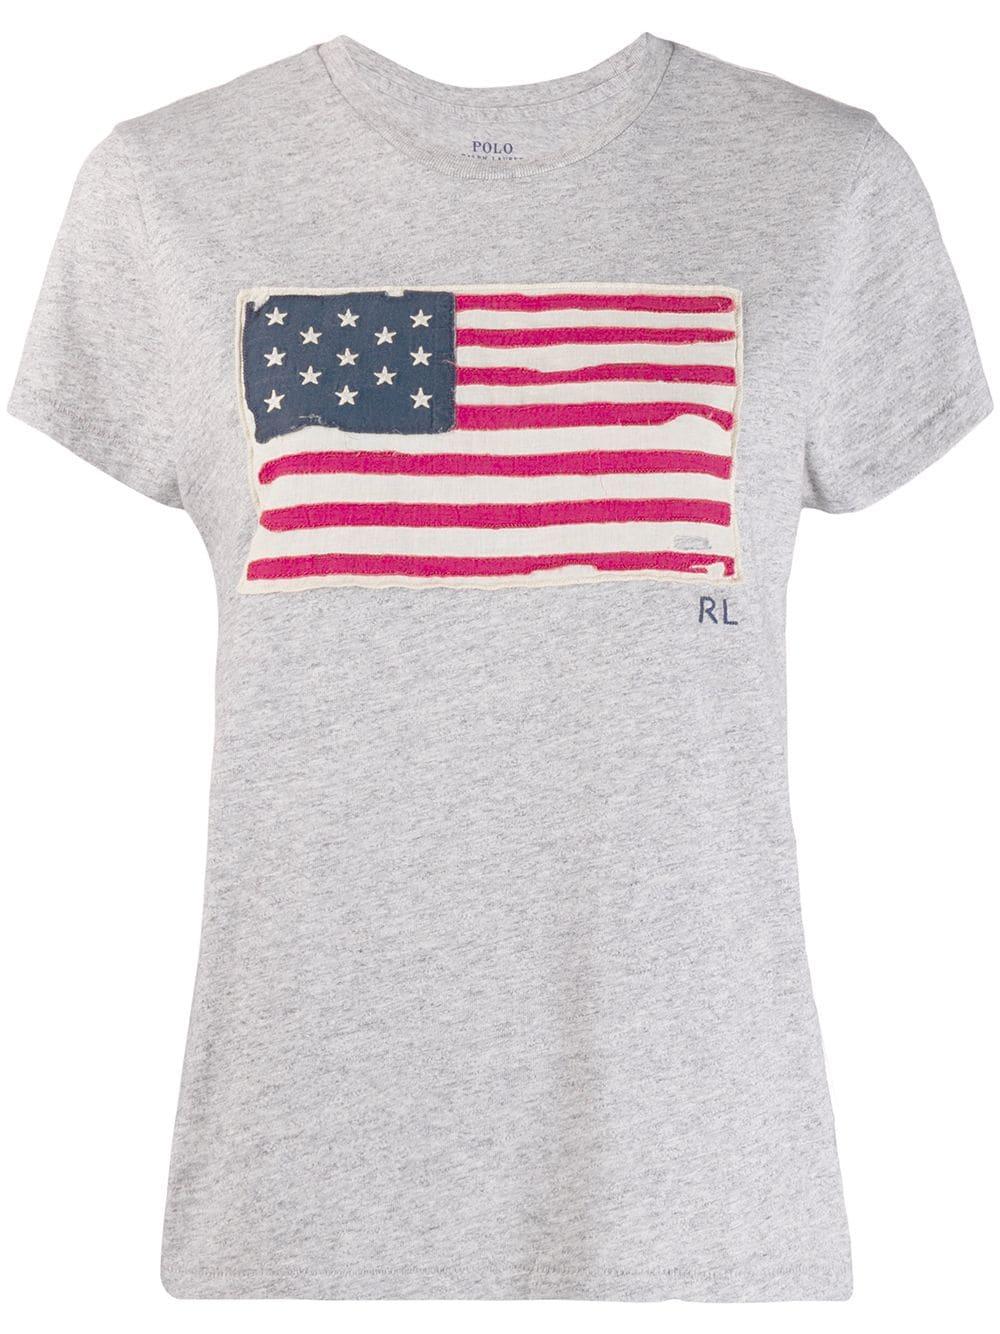 Polo Ralph Lauren Usa Flag T-shirt in Grey | Lyst UK